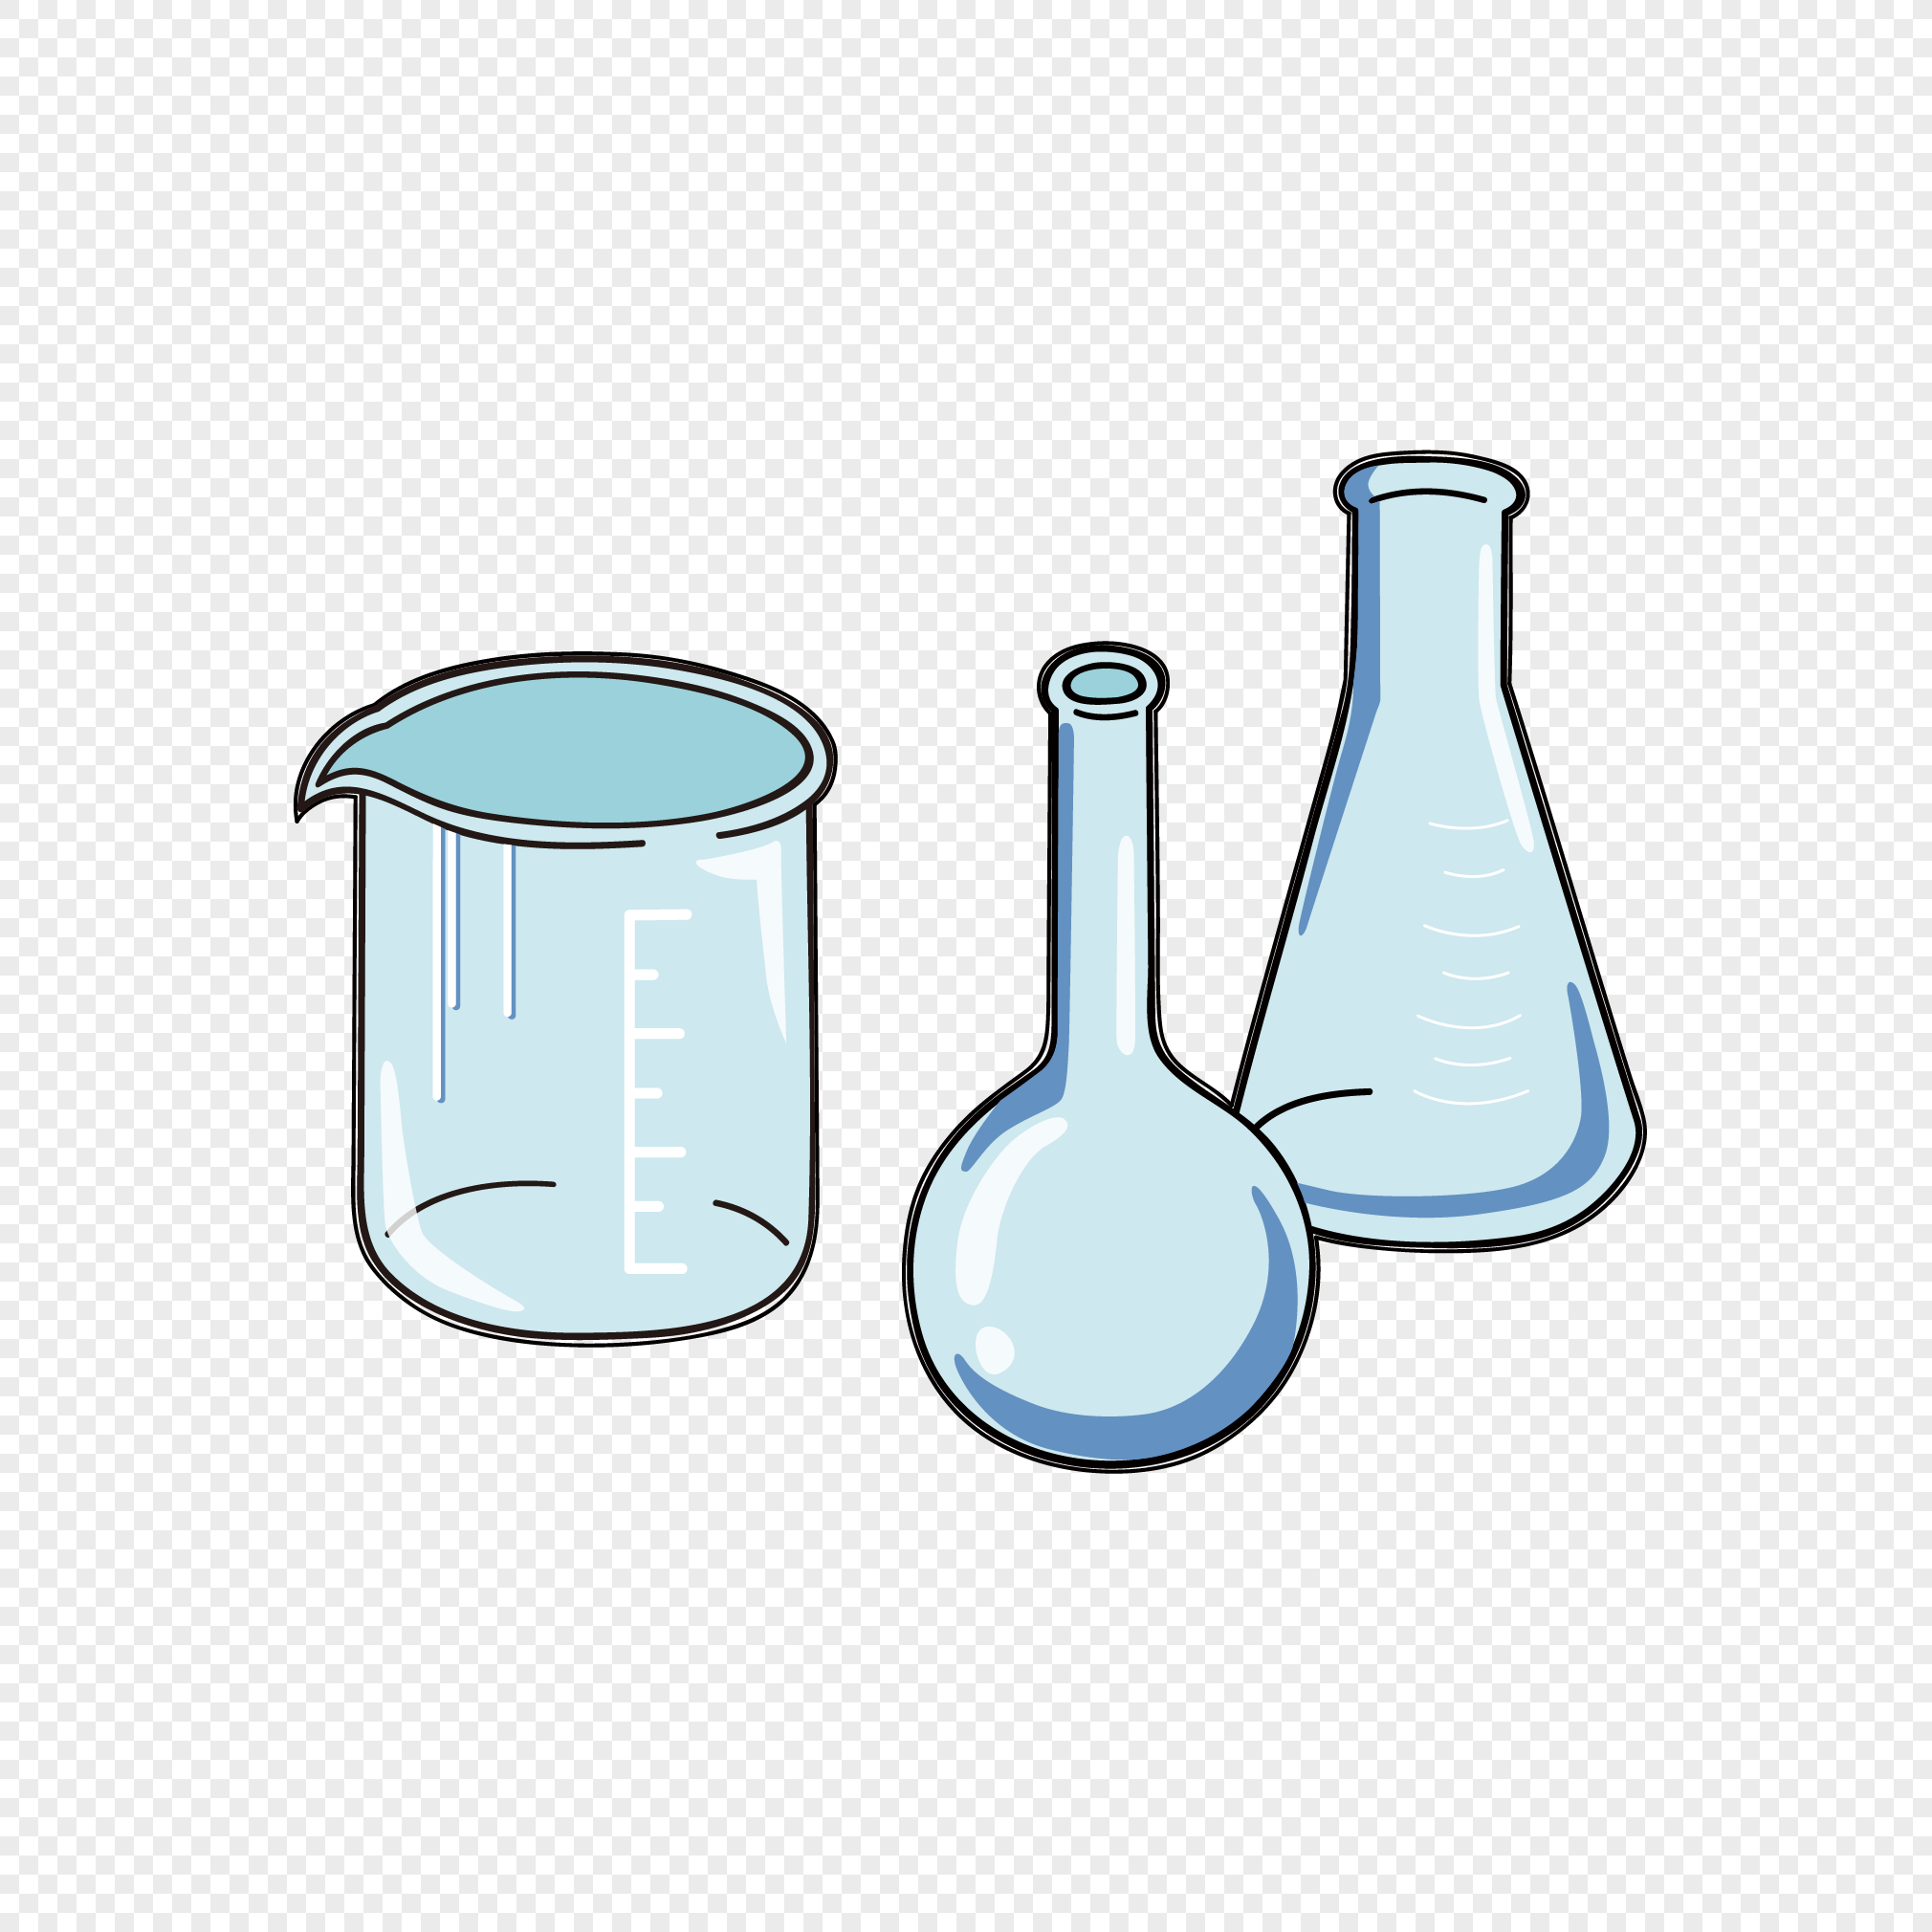 Химическая посуда на прозрачном фоне